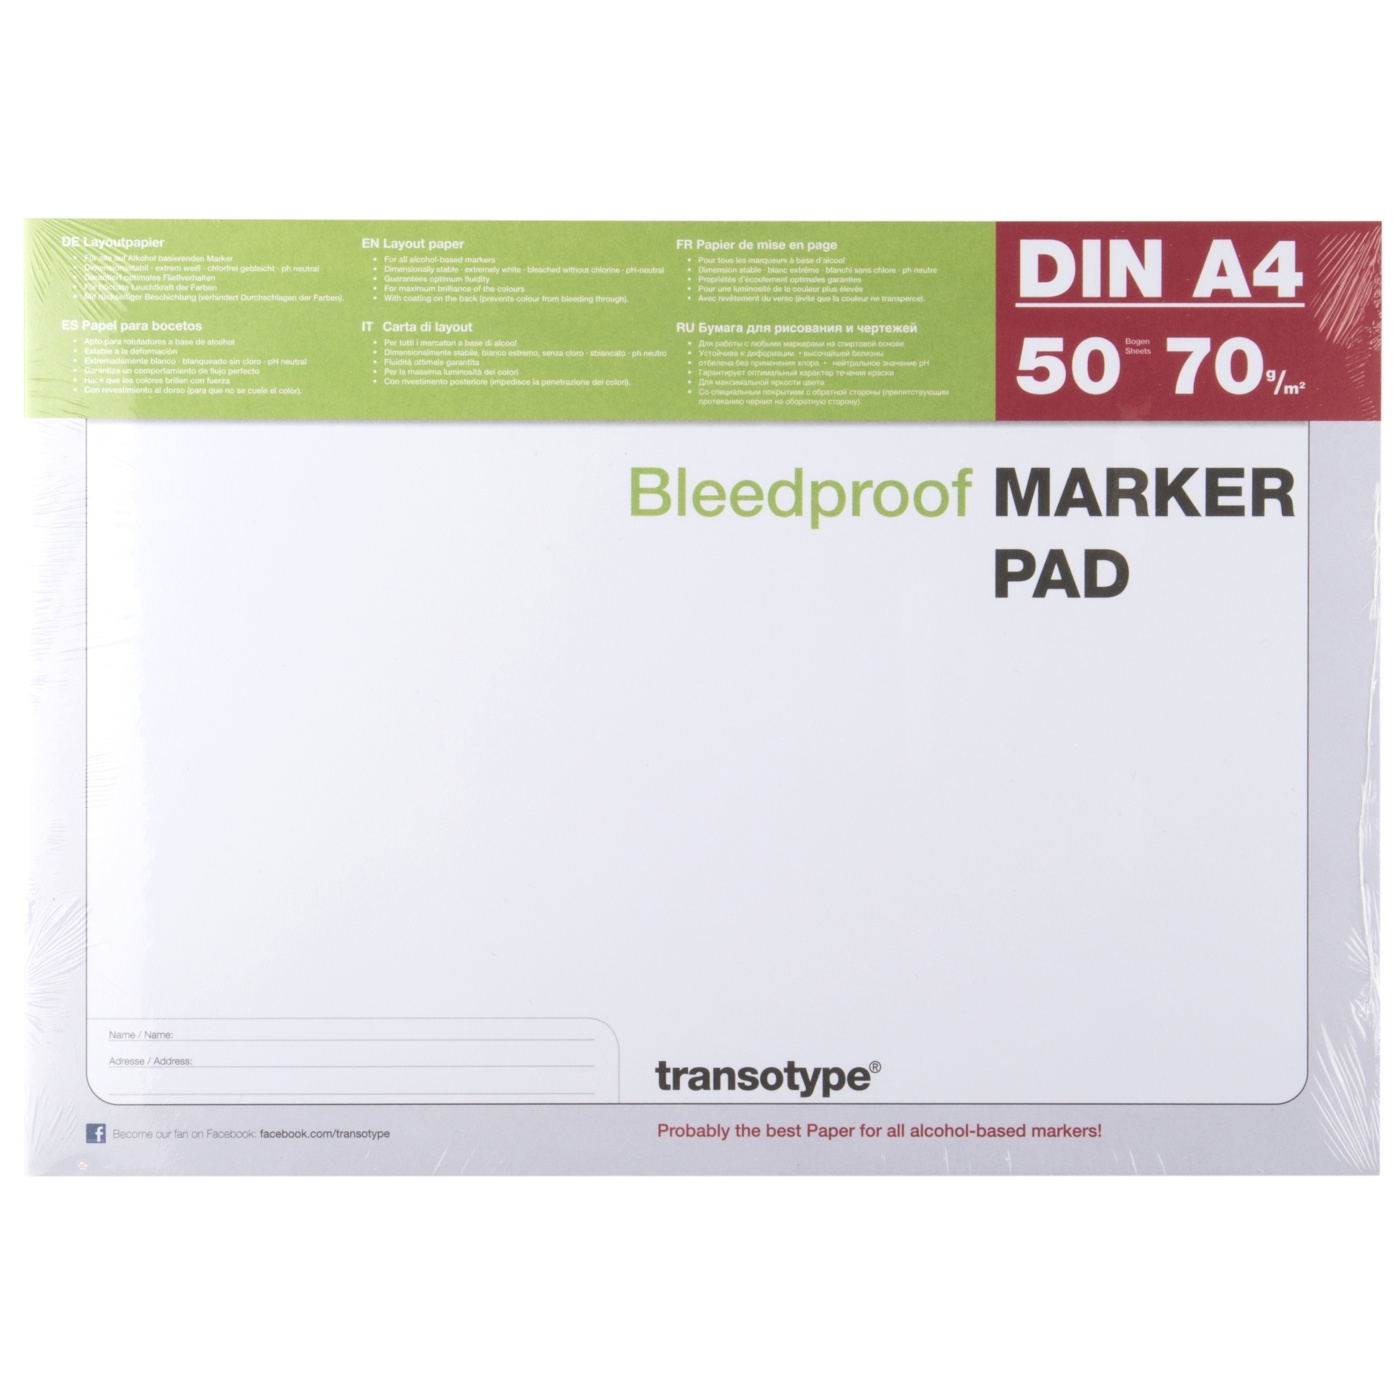 Winsor & Newton Bleed Proof Marker Paper Pad A4 